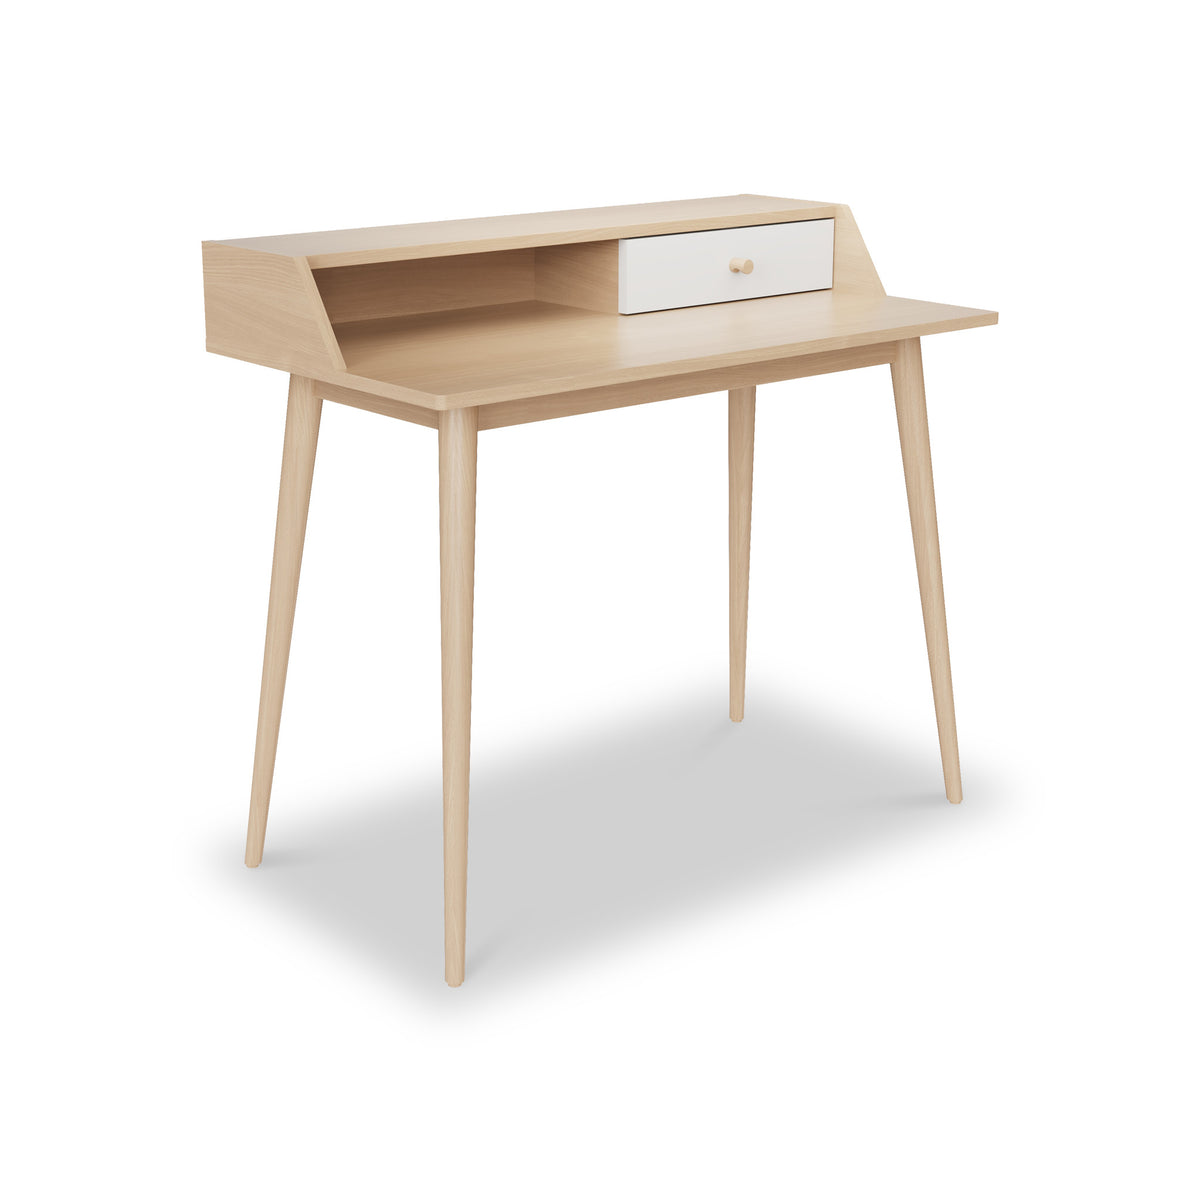 Barford Oak and White Smart Desk from Roseland Furniture